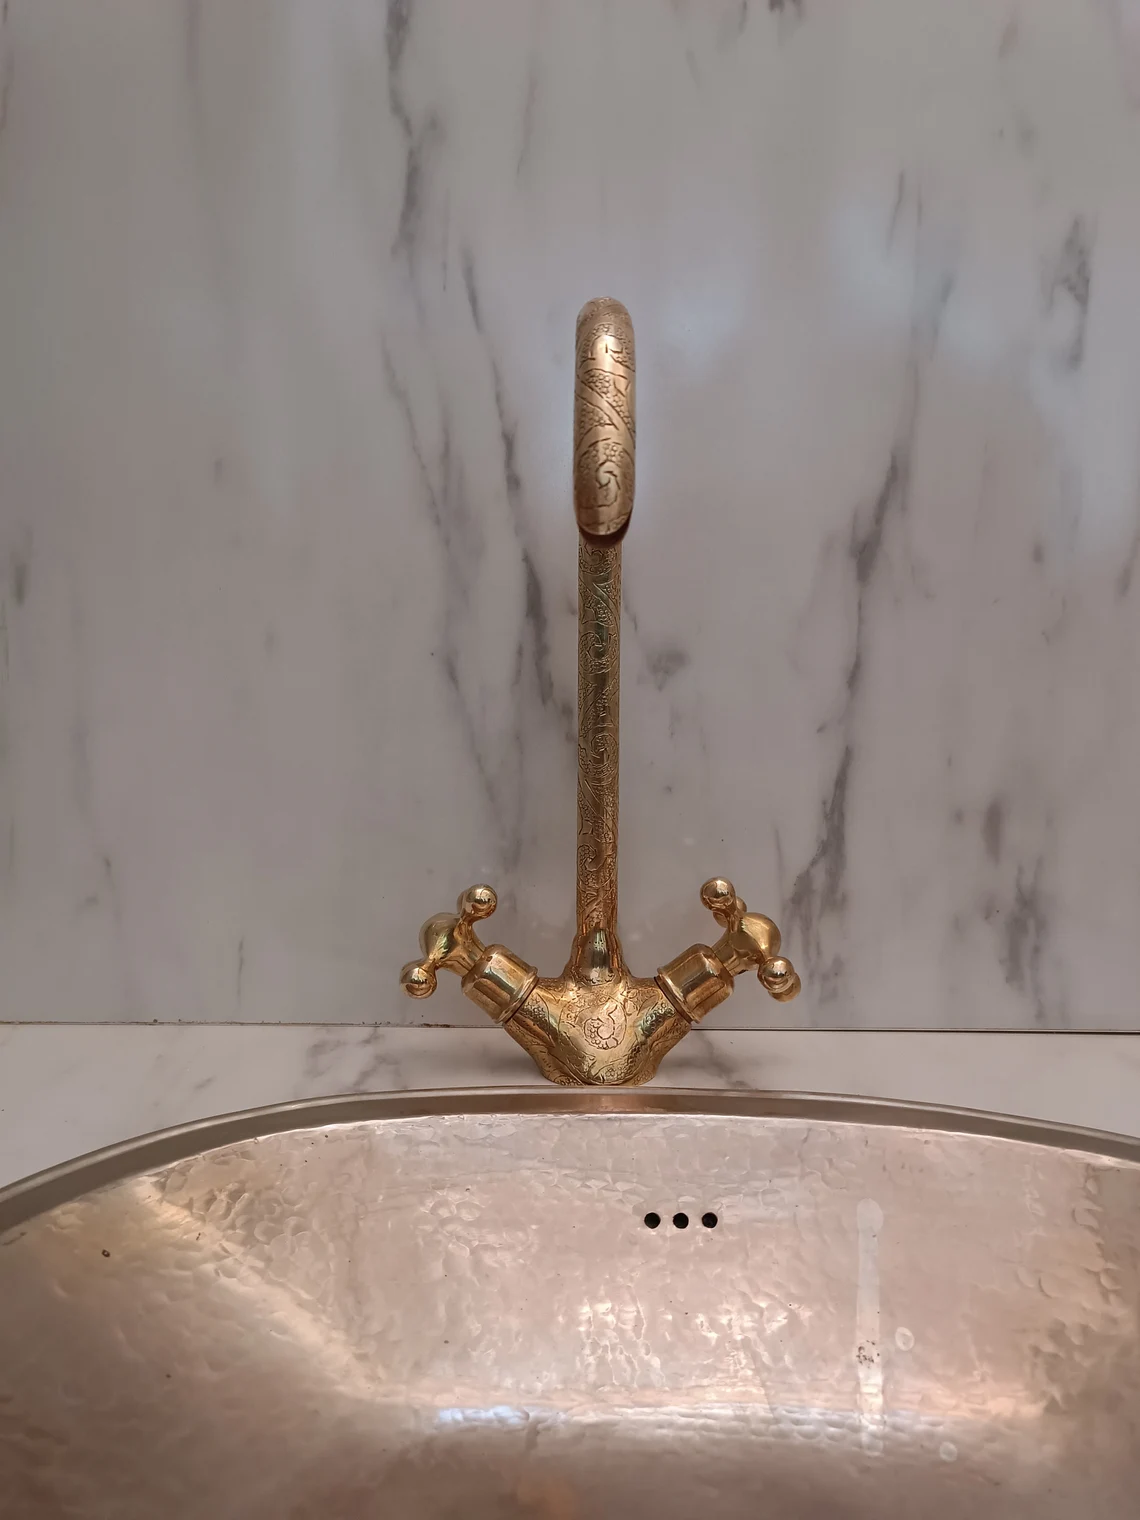 Brass Bathroom Sink faucet - Moroccan Embossed Sink Faucet - Gooseneck Faucet - Swan Neck Brass Faucet - Kitchen Faucet